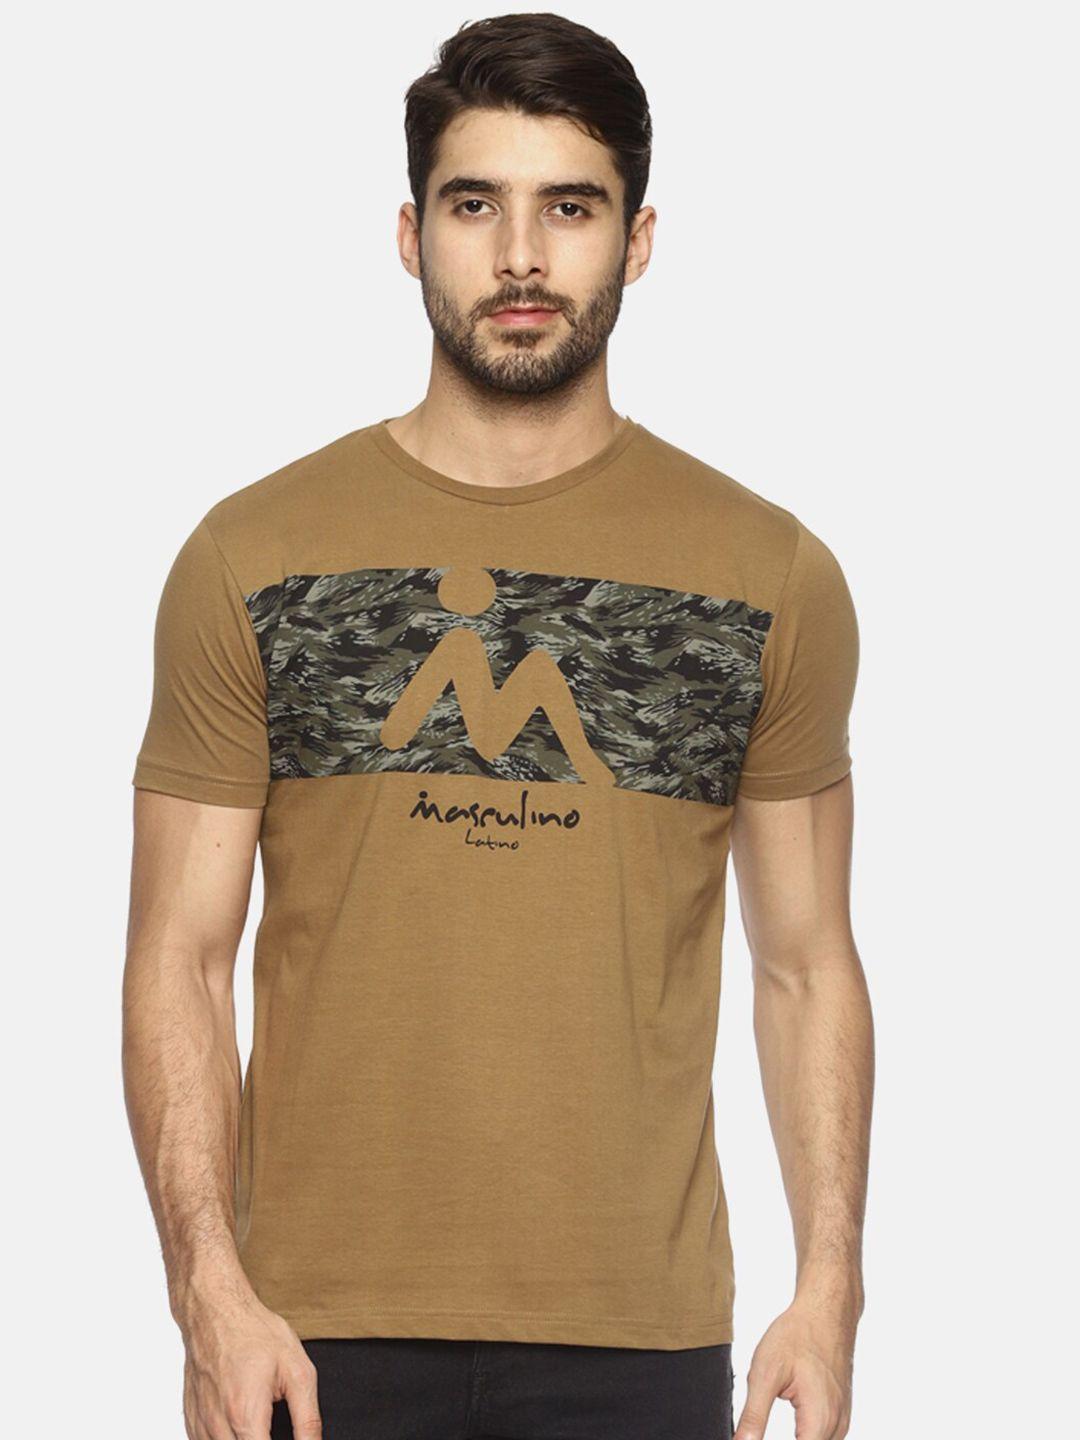 masculino latino men khaki printed t-shirt